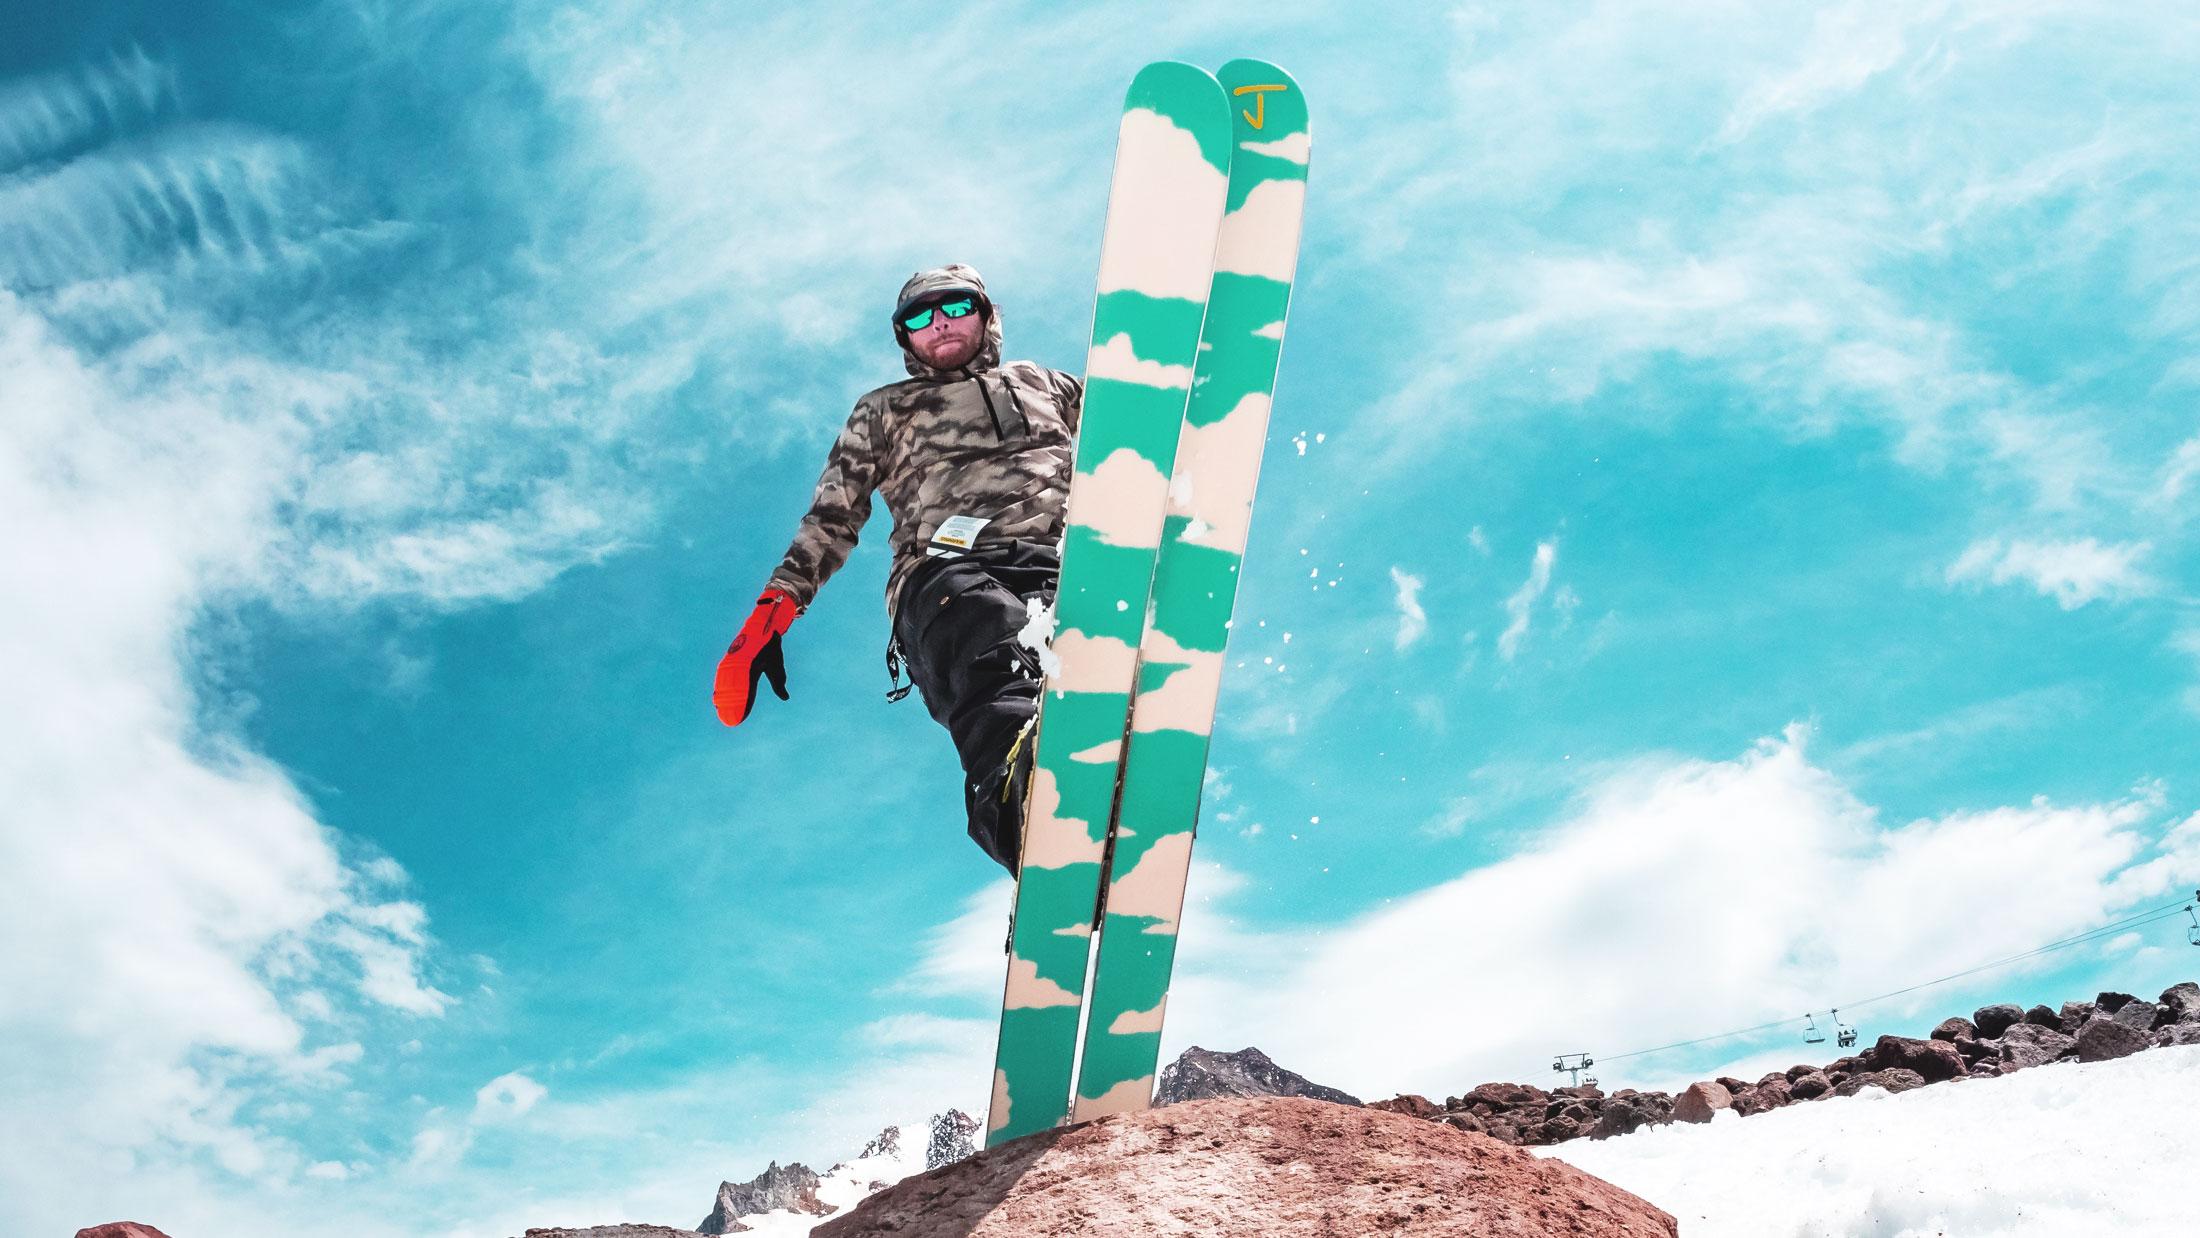 The Vacation "NATIONAL" Sam Larson x J Collab Limited Edition Ski Shredding Image